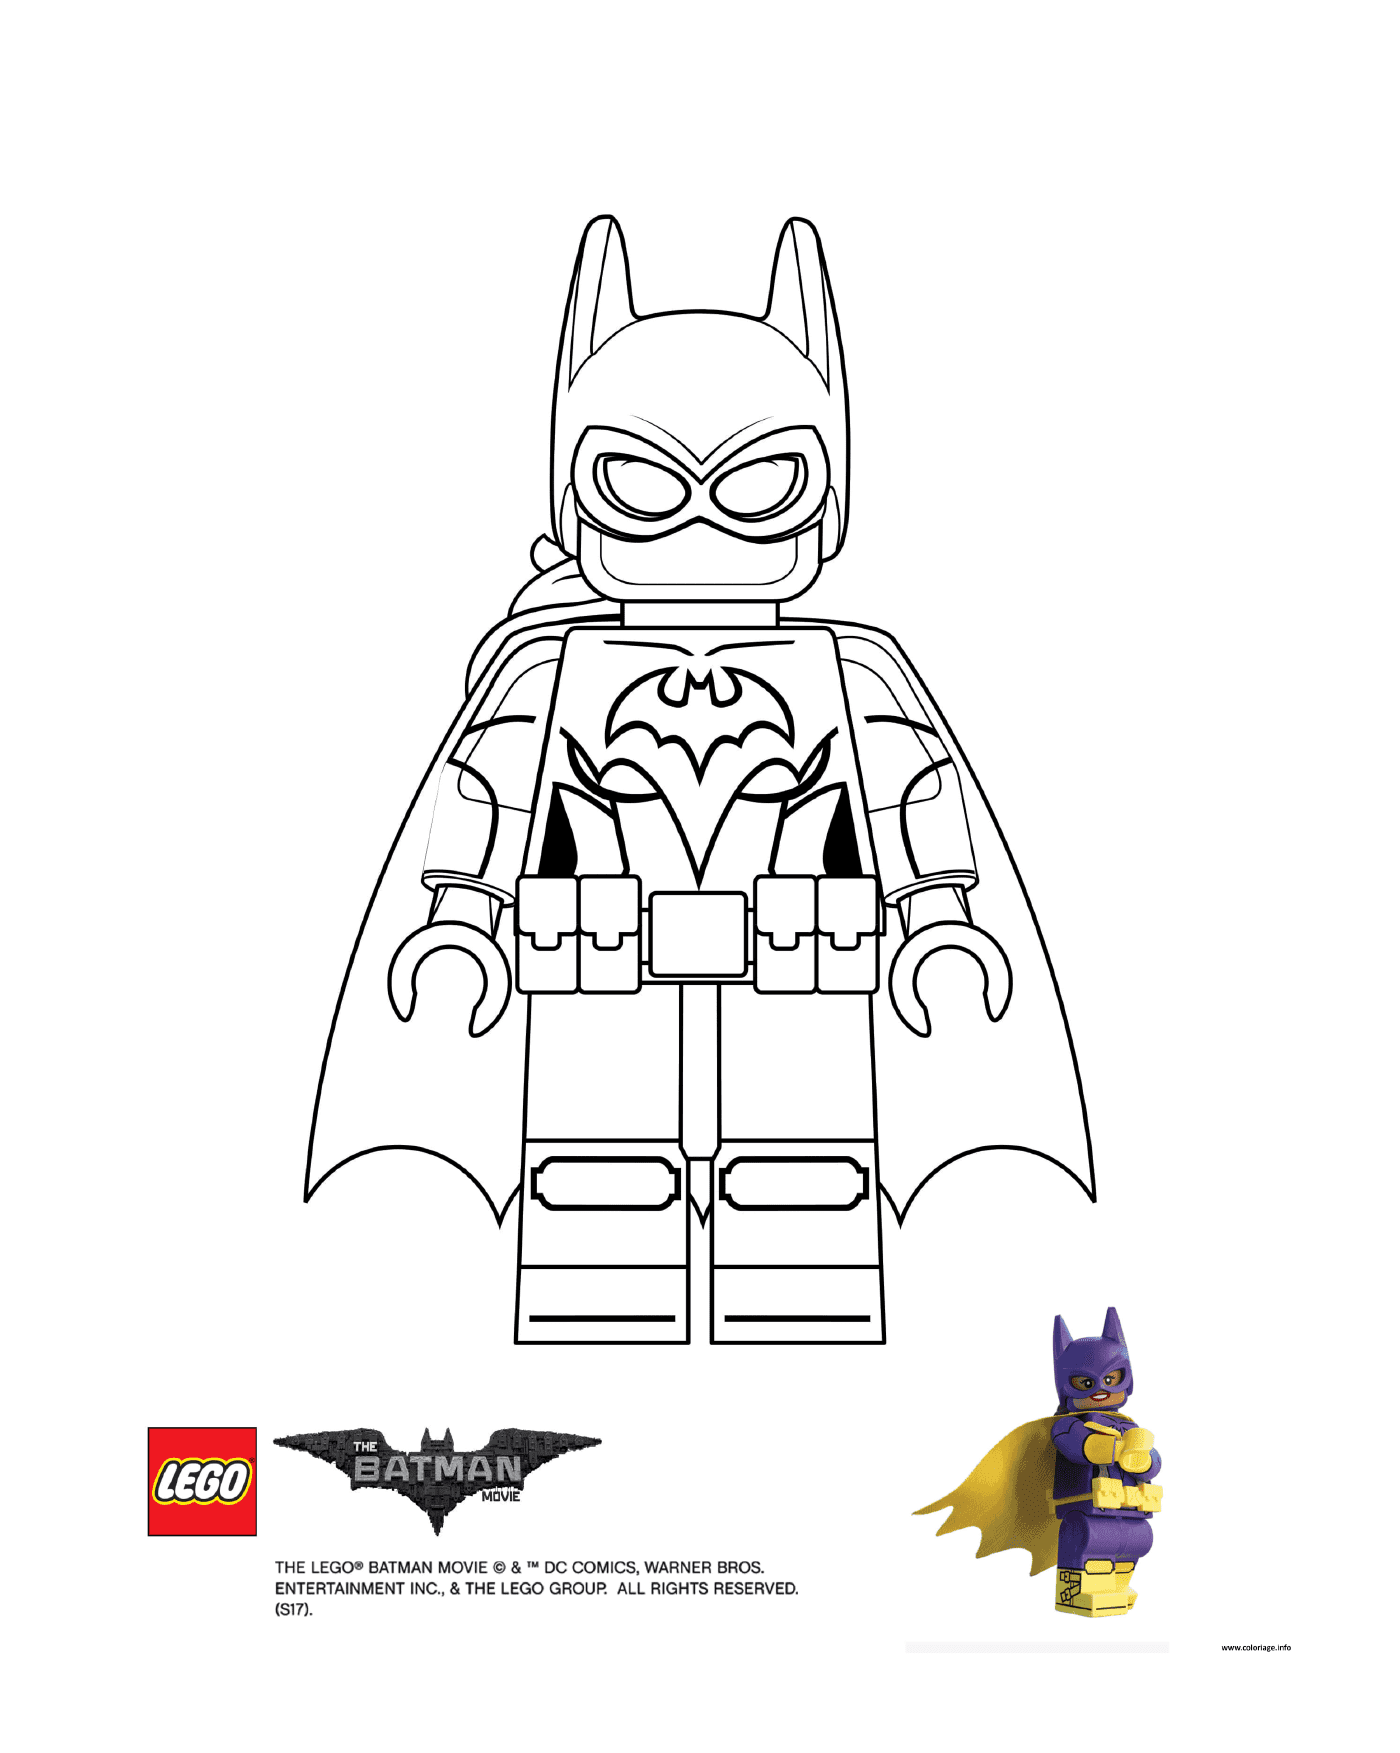  Batgirl in the movie Lego Batman 